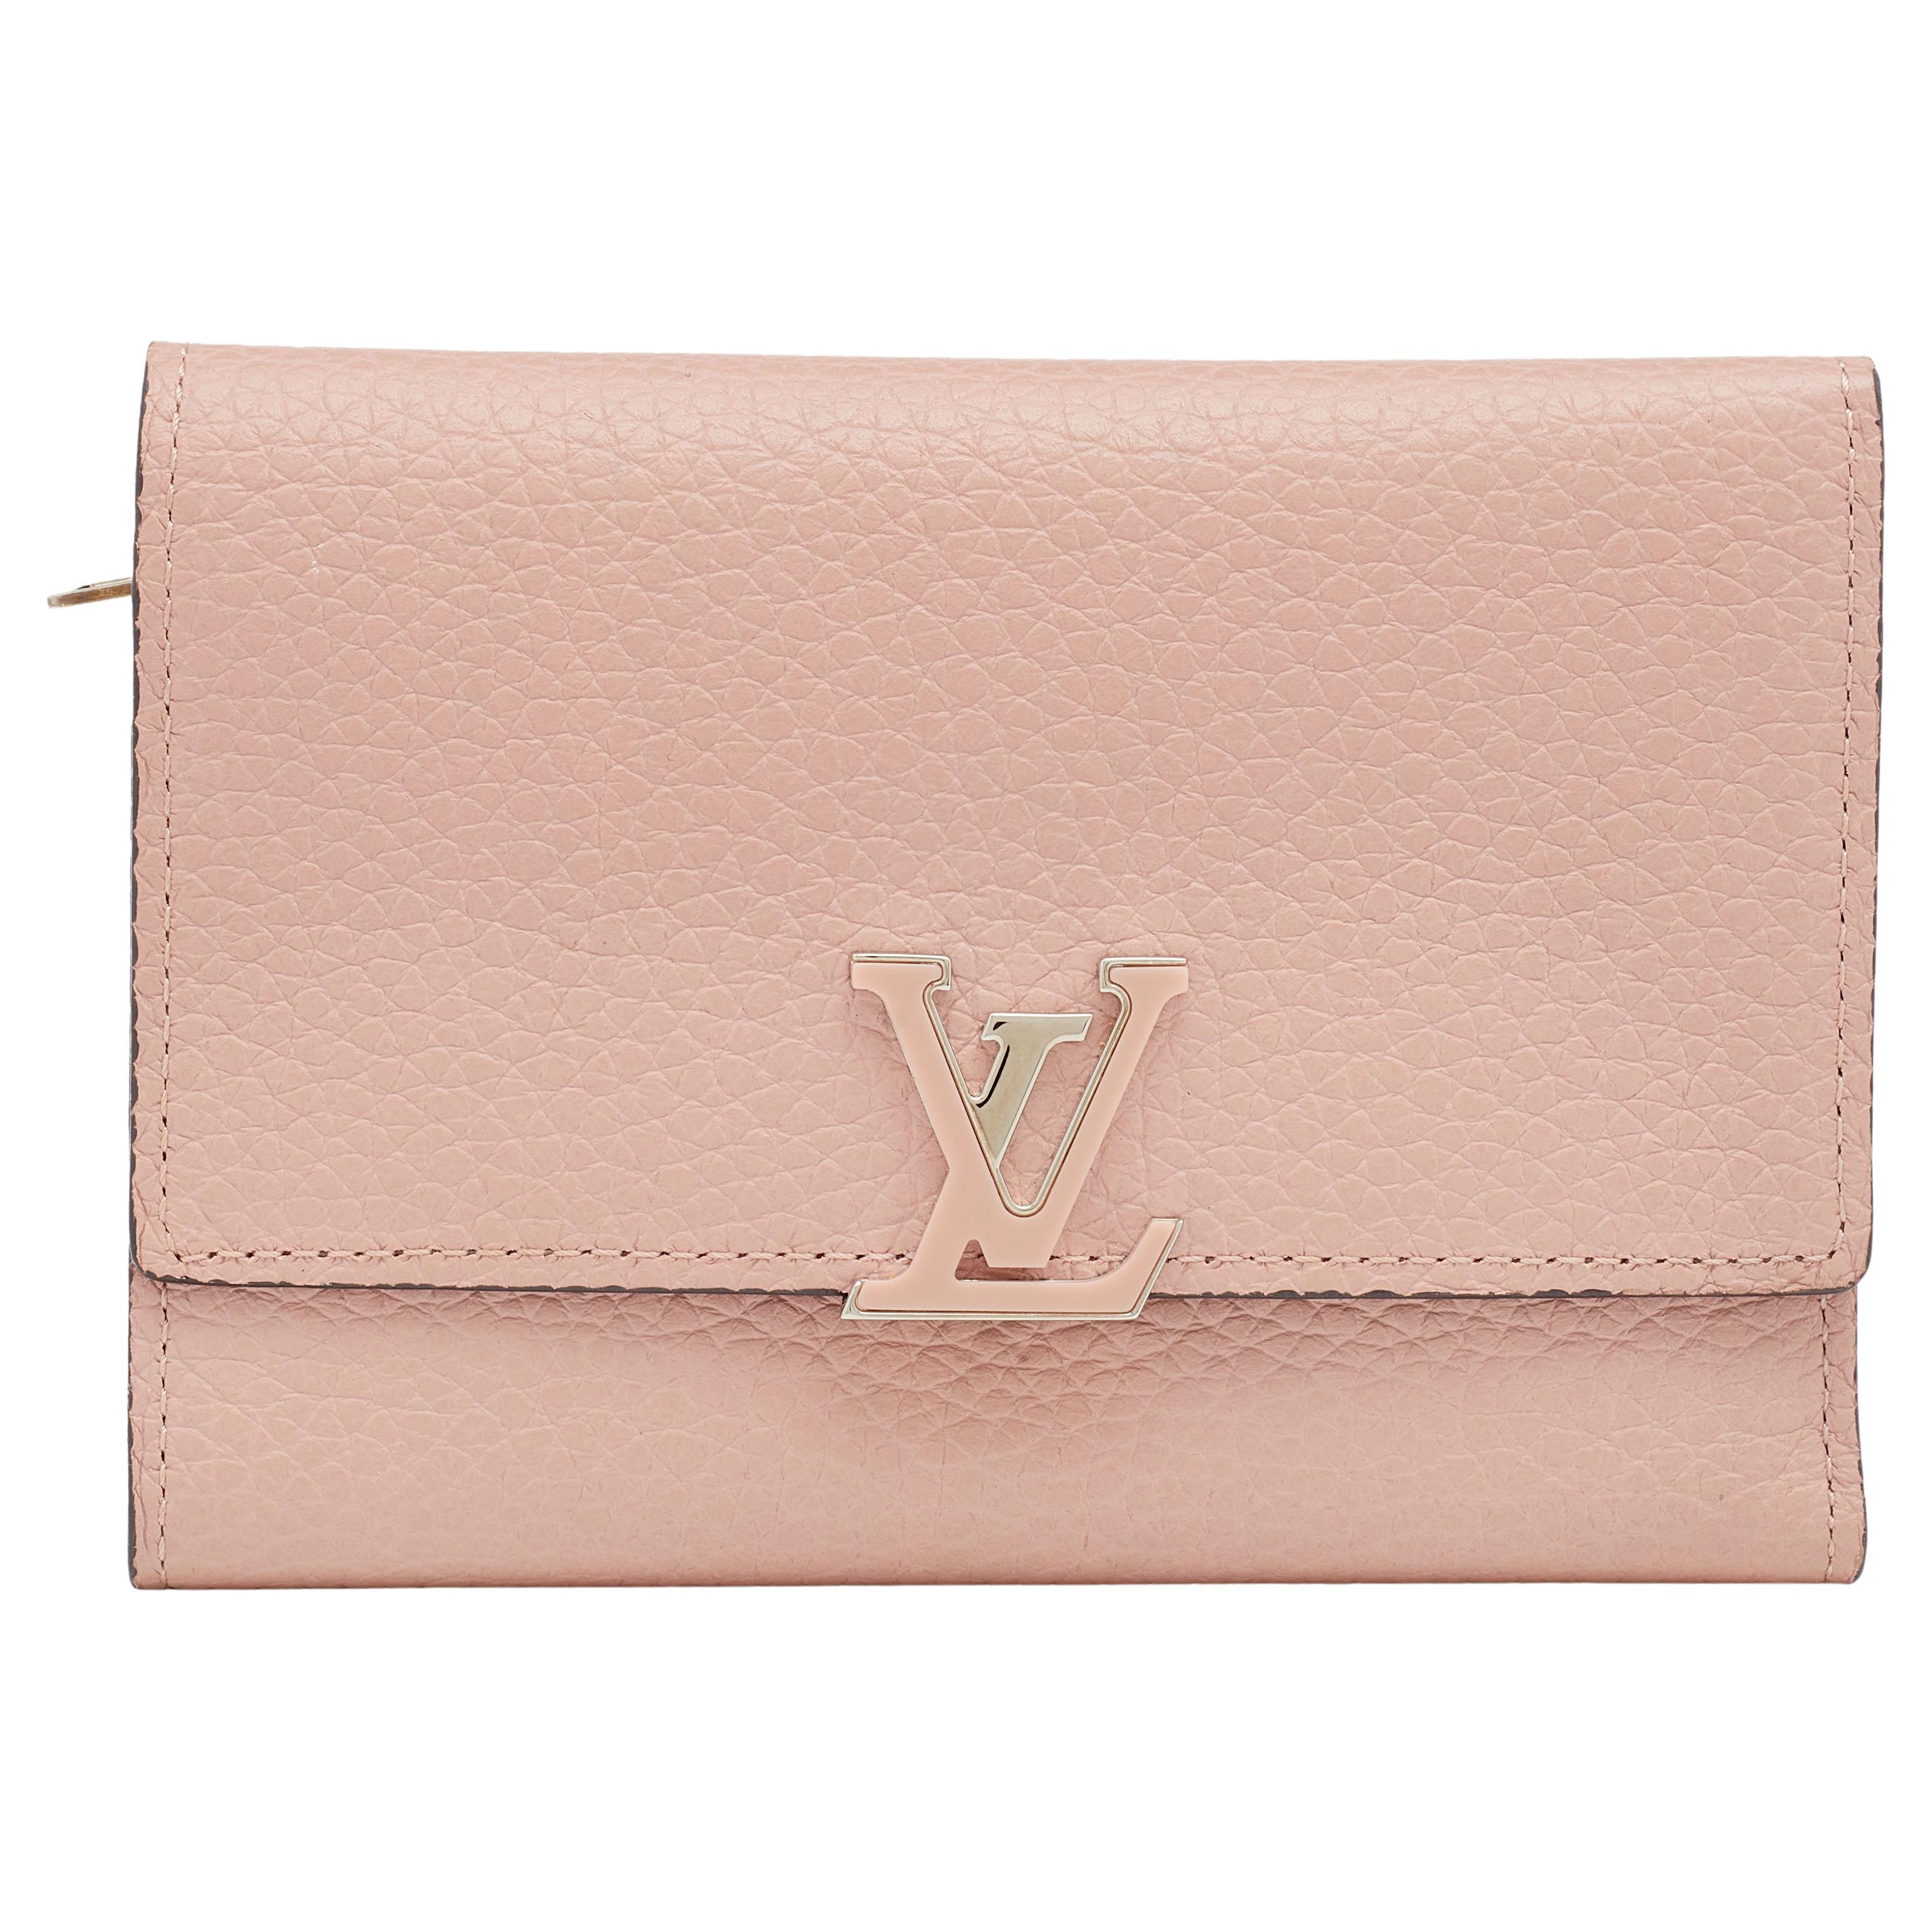 Louis Vuitton capucines leather compact wallet summer stardust